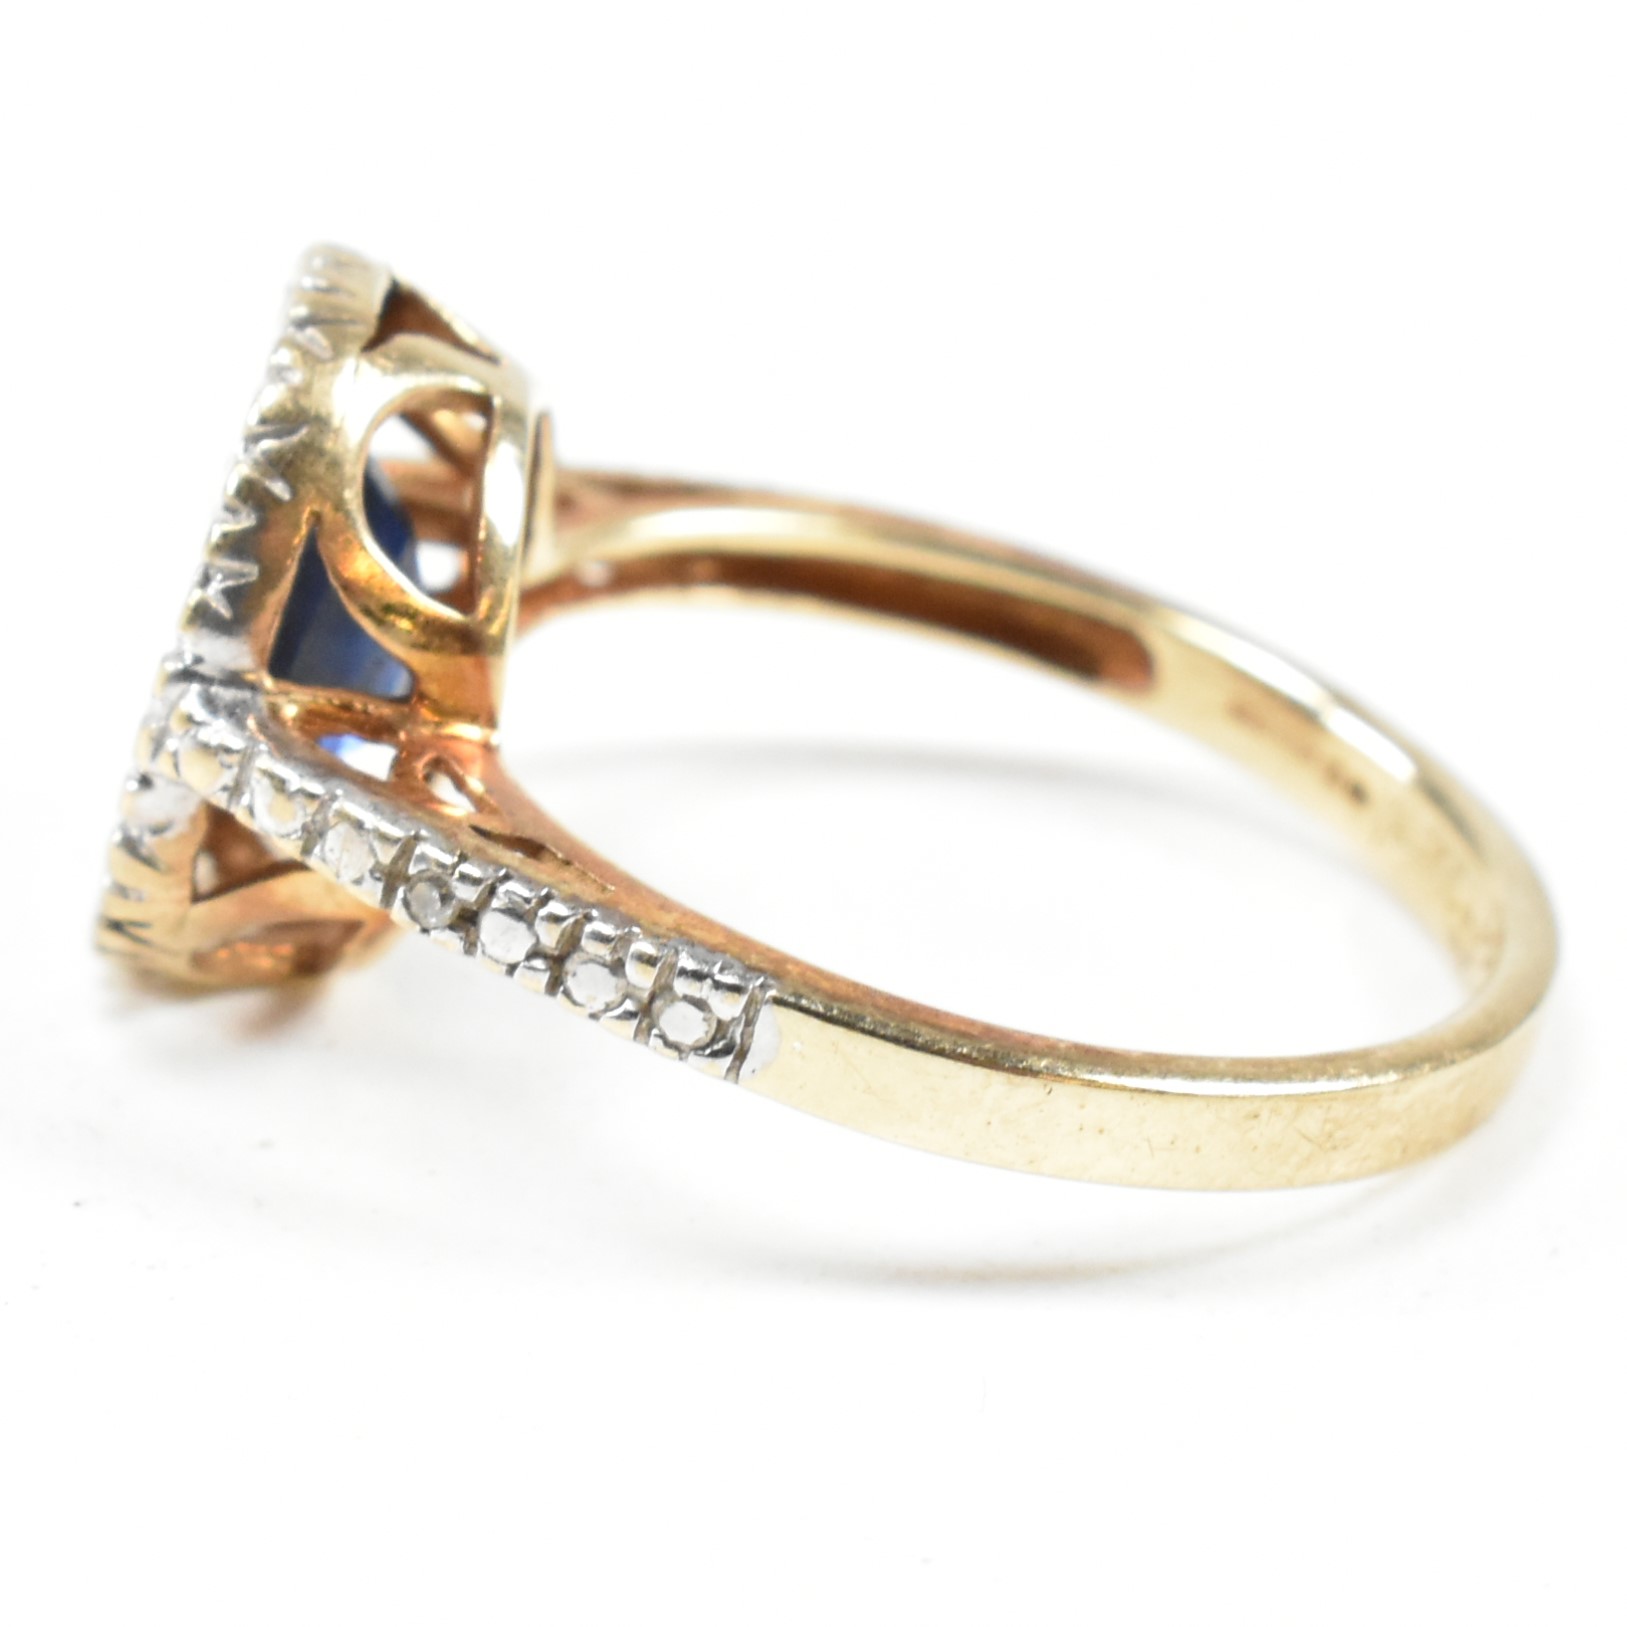 HALLMARKED 9CT GOLD SAPPHIRE & DIAMOND RING - Image 6 of 9